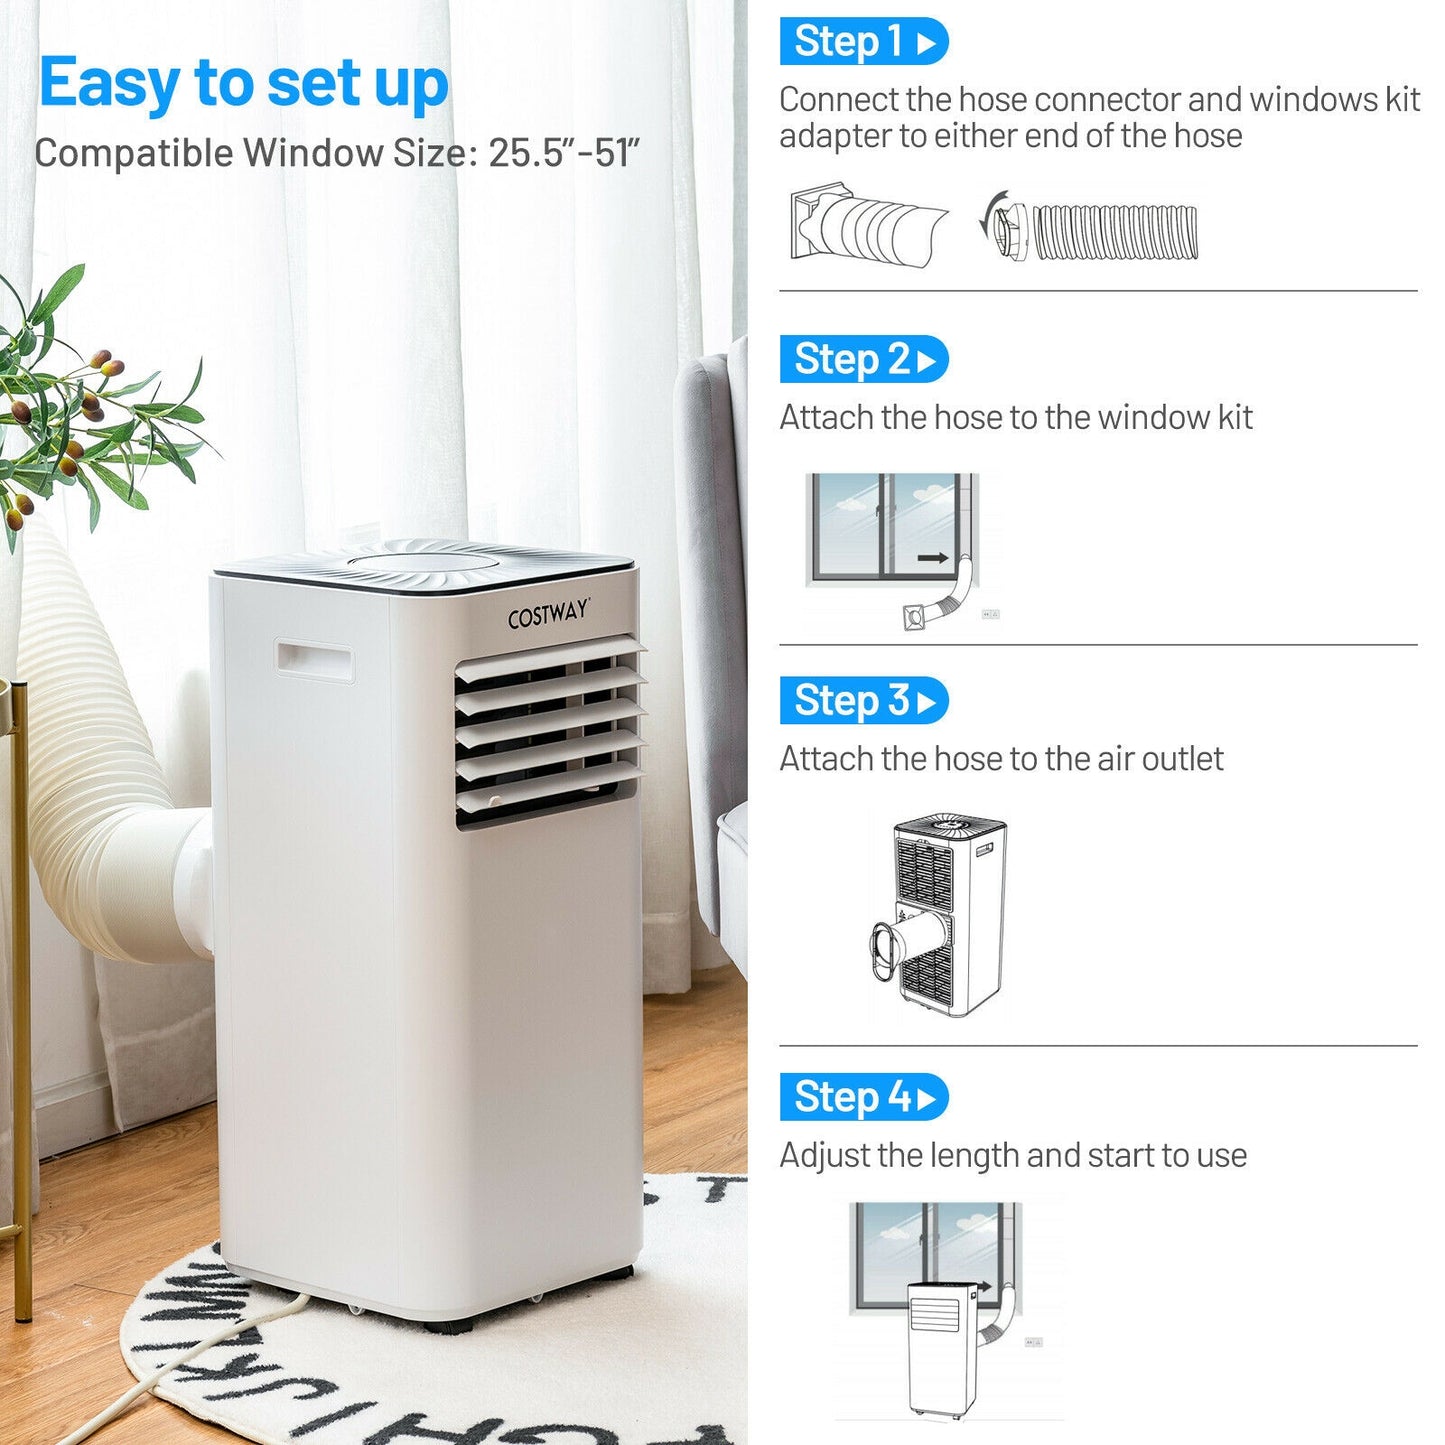 Portable Air Conditioner 10000 BTU Evaporative Air Cooler Dehumidifier-White